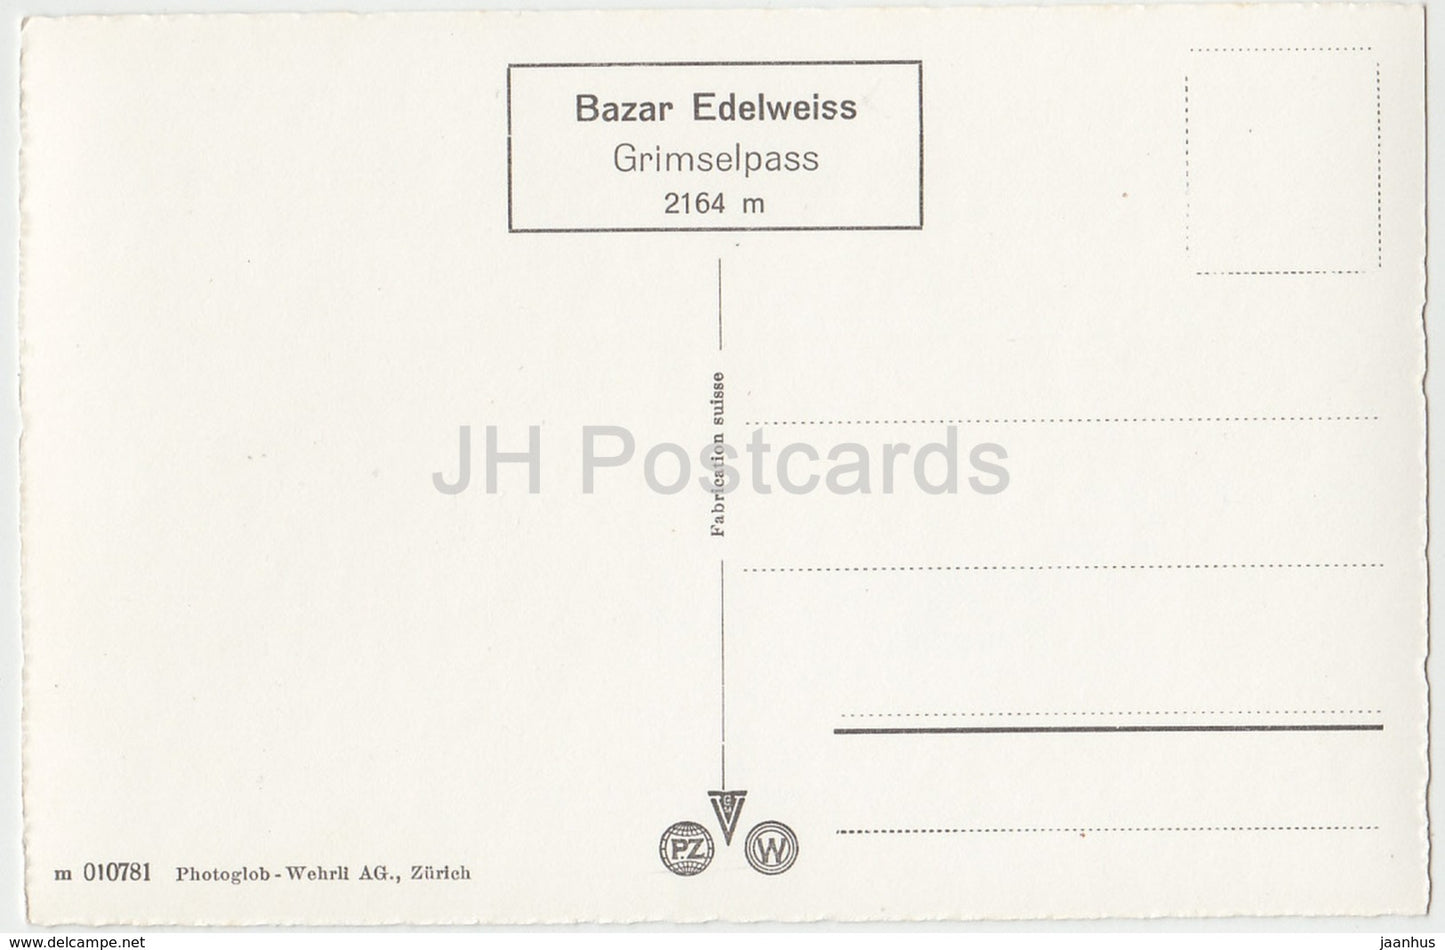 Grimsel - Passhohe - old car - Bazar Edelweiss - 010781 - Switzerland - old postcard - unused